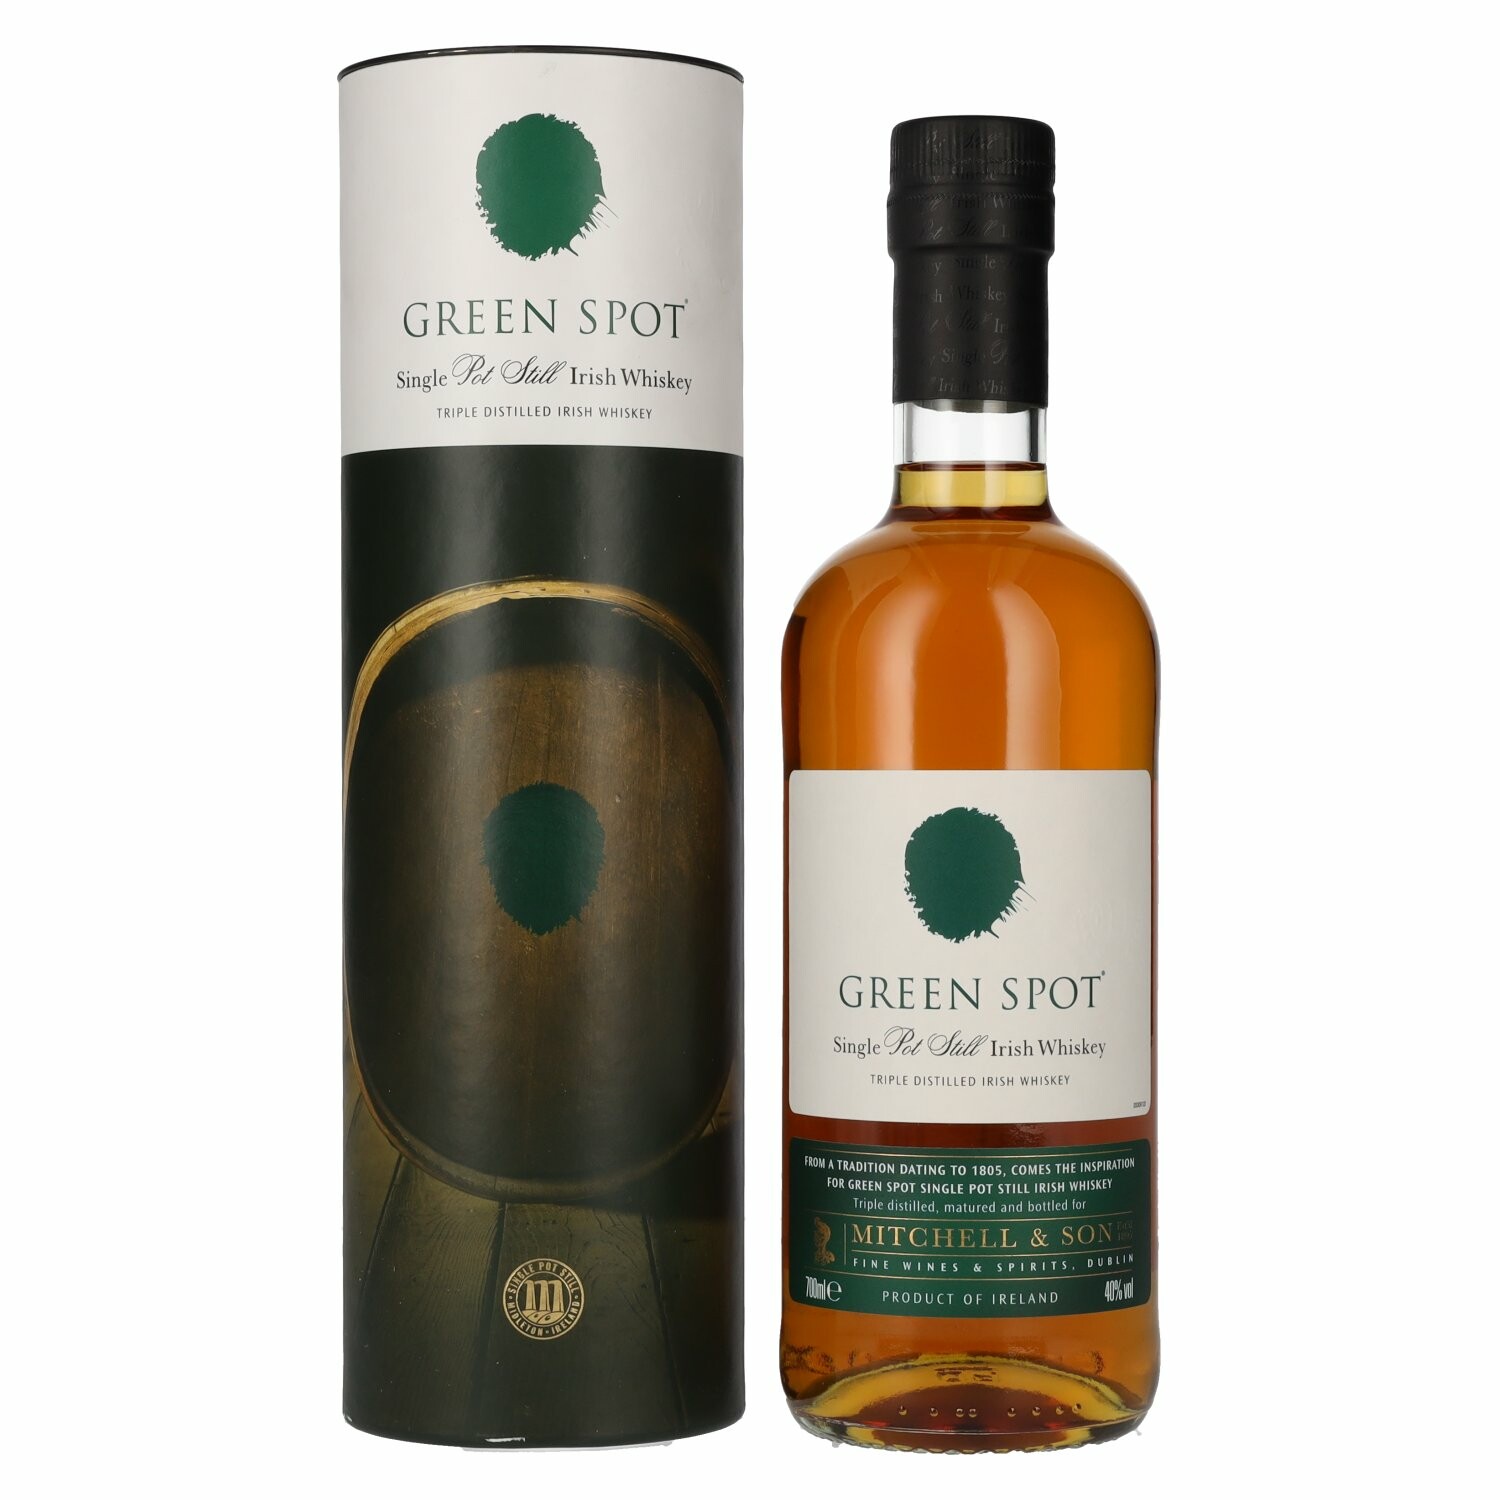 Green Spot Single Pot Still Irish Whiskey 40% Vol. 0,7l in Giftbox